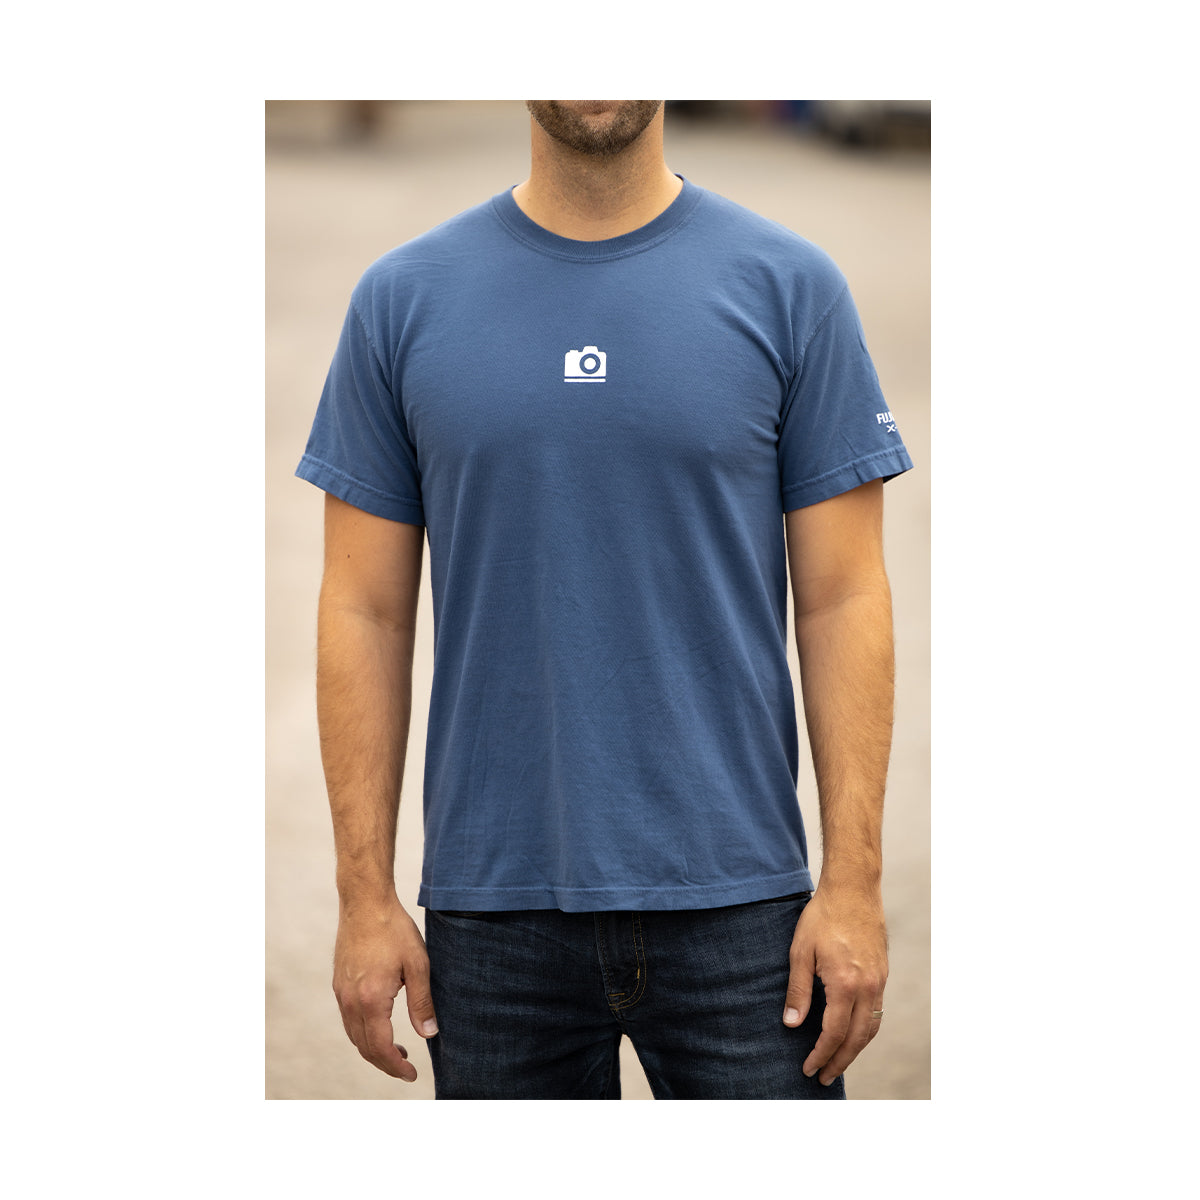 pictureline Apparel: Spring 2020 Short Sleeve Shirt Extra Large (Blue)